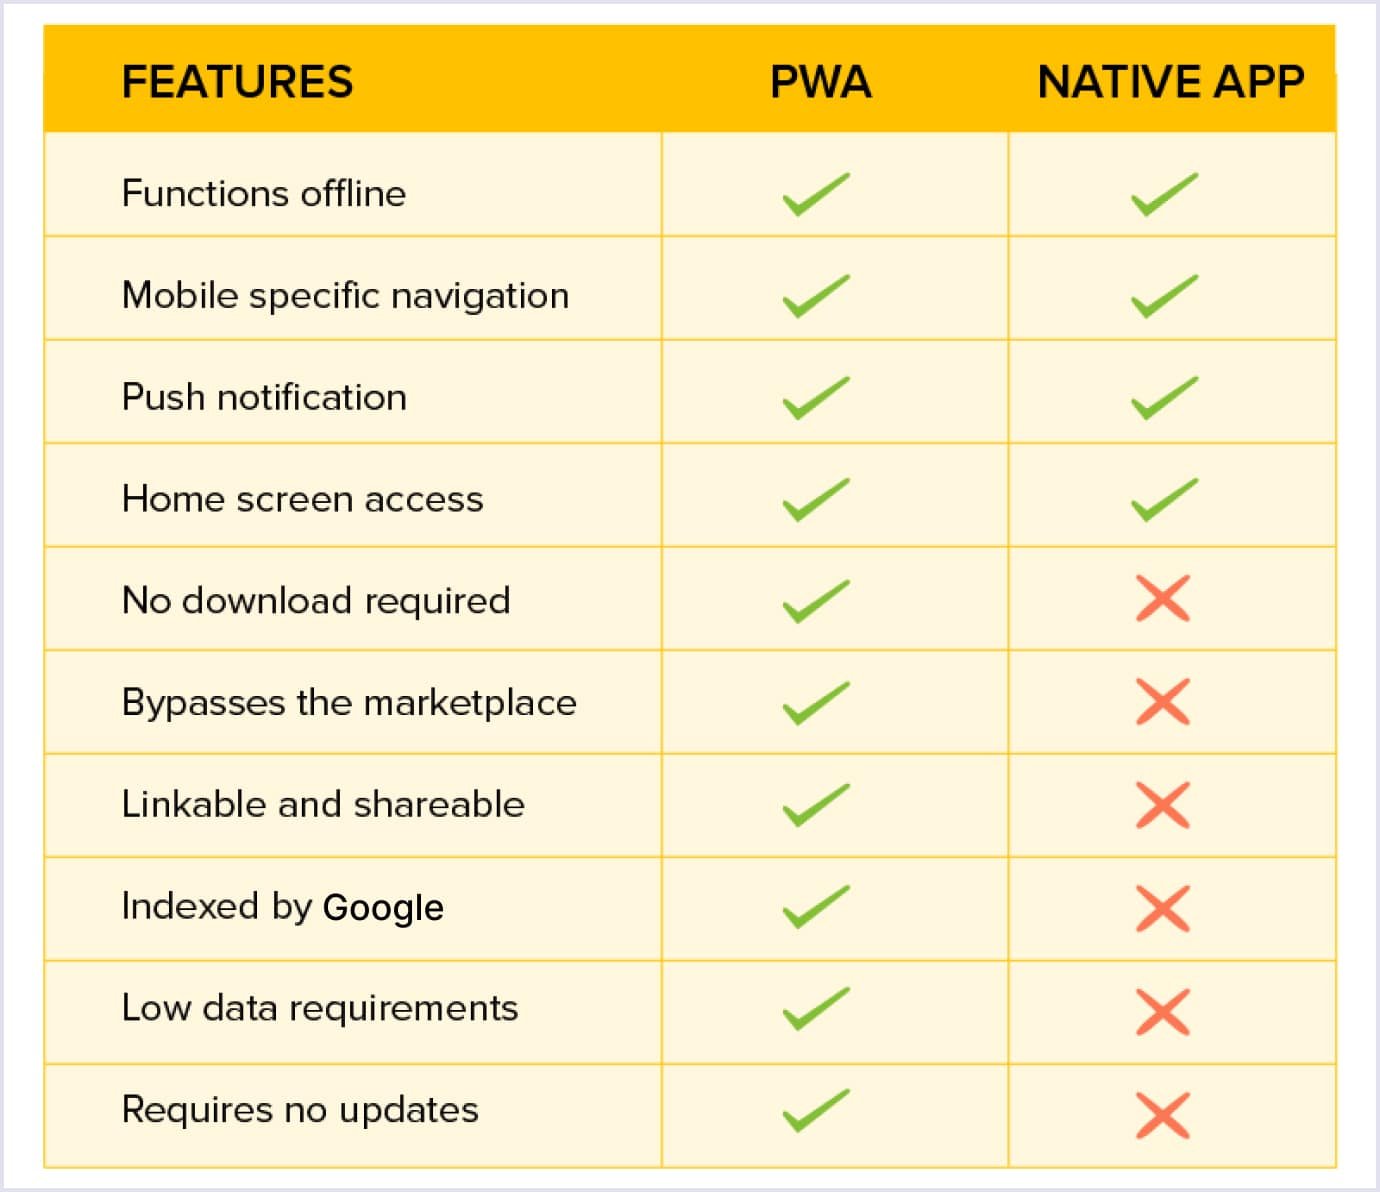 PWA vs native app features comparison